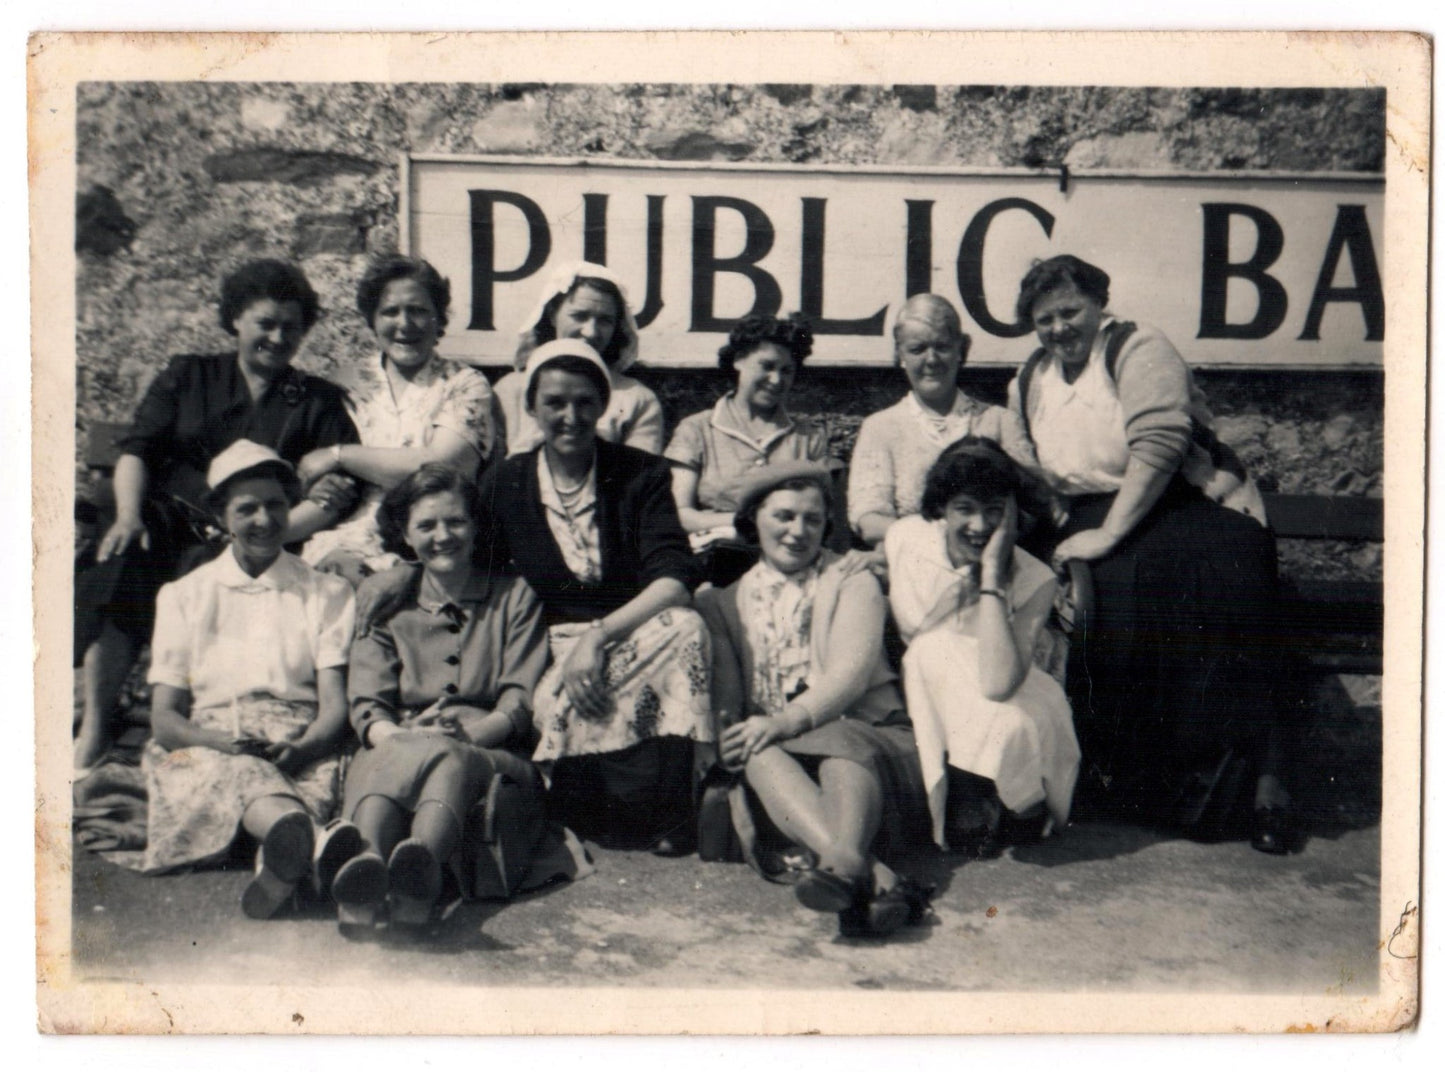 Original Vintage Photo - Group Photo of Friends - Daily Life - United Kingdom